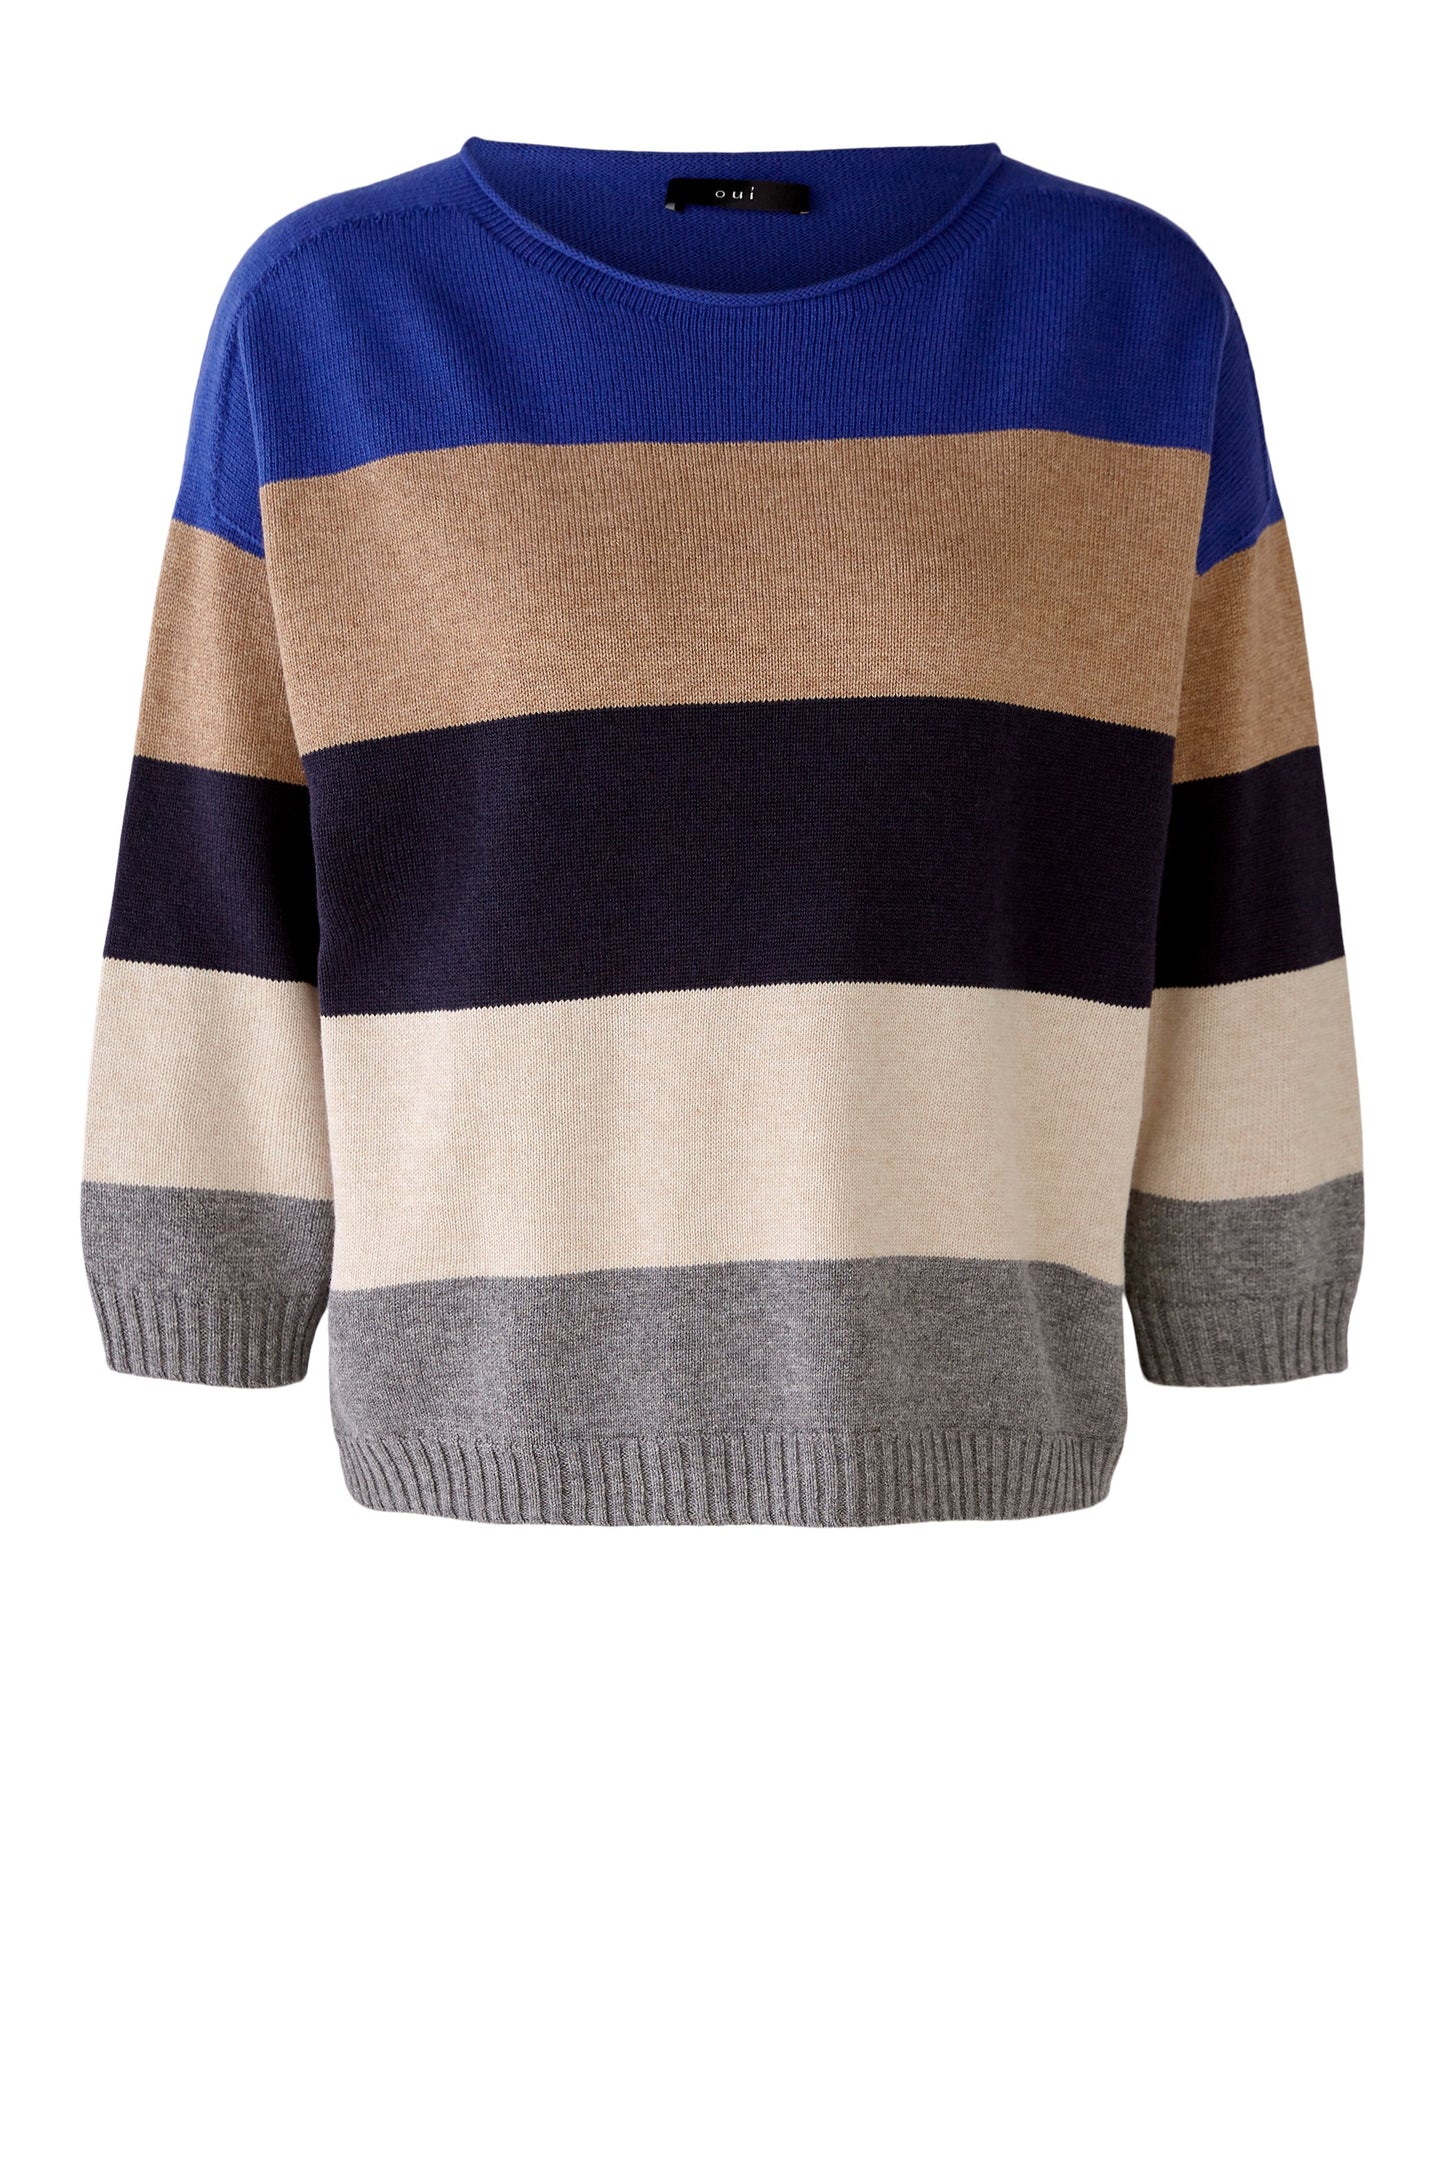 Oui Bold Stripe Sweater